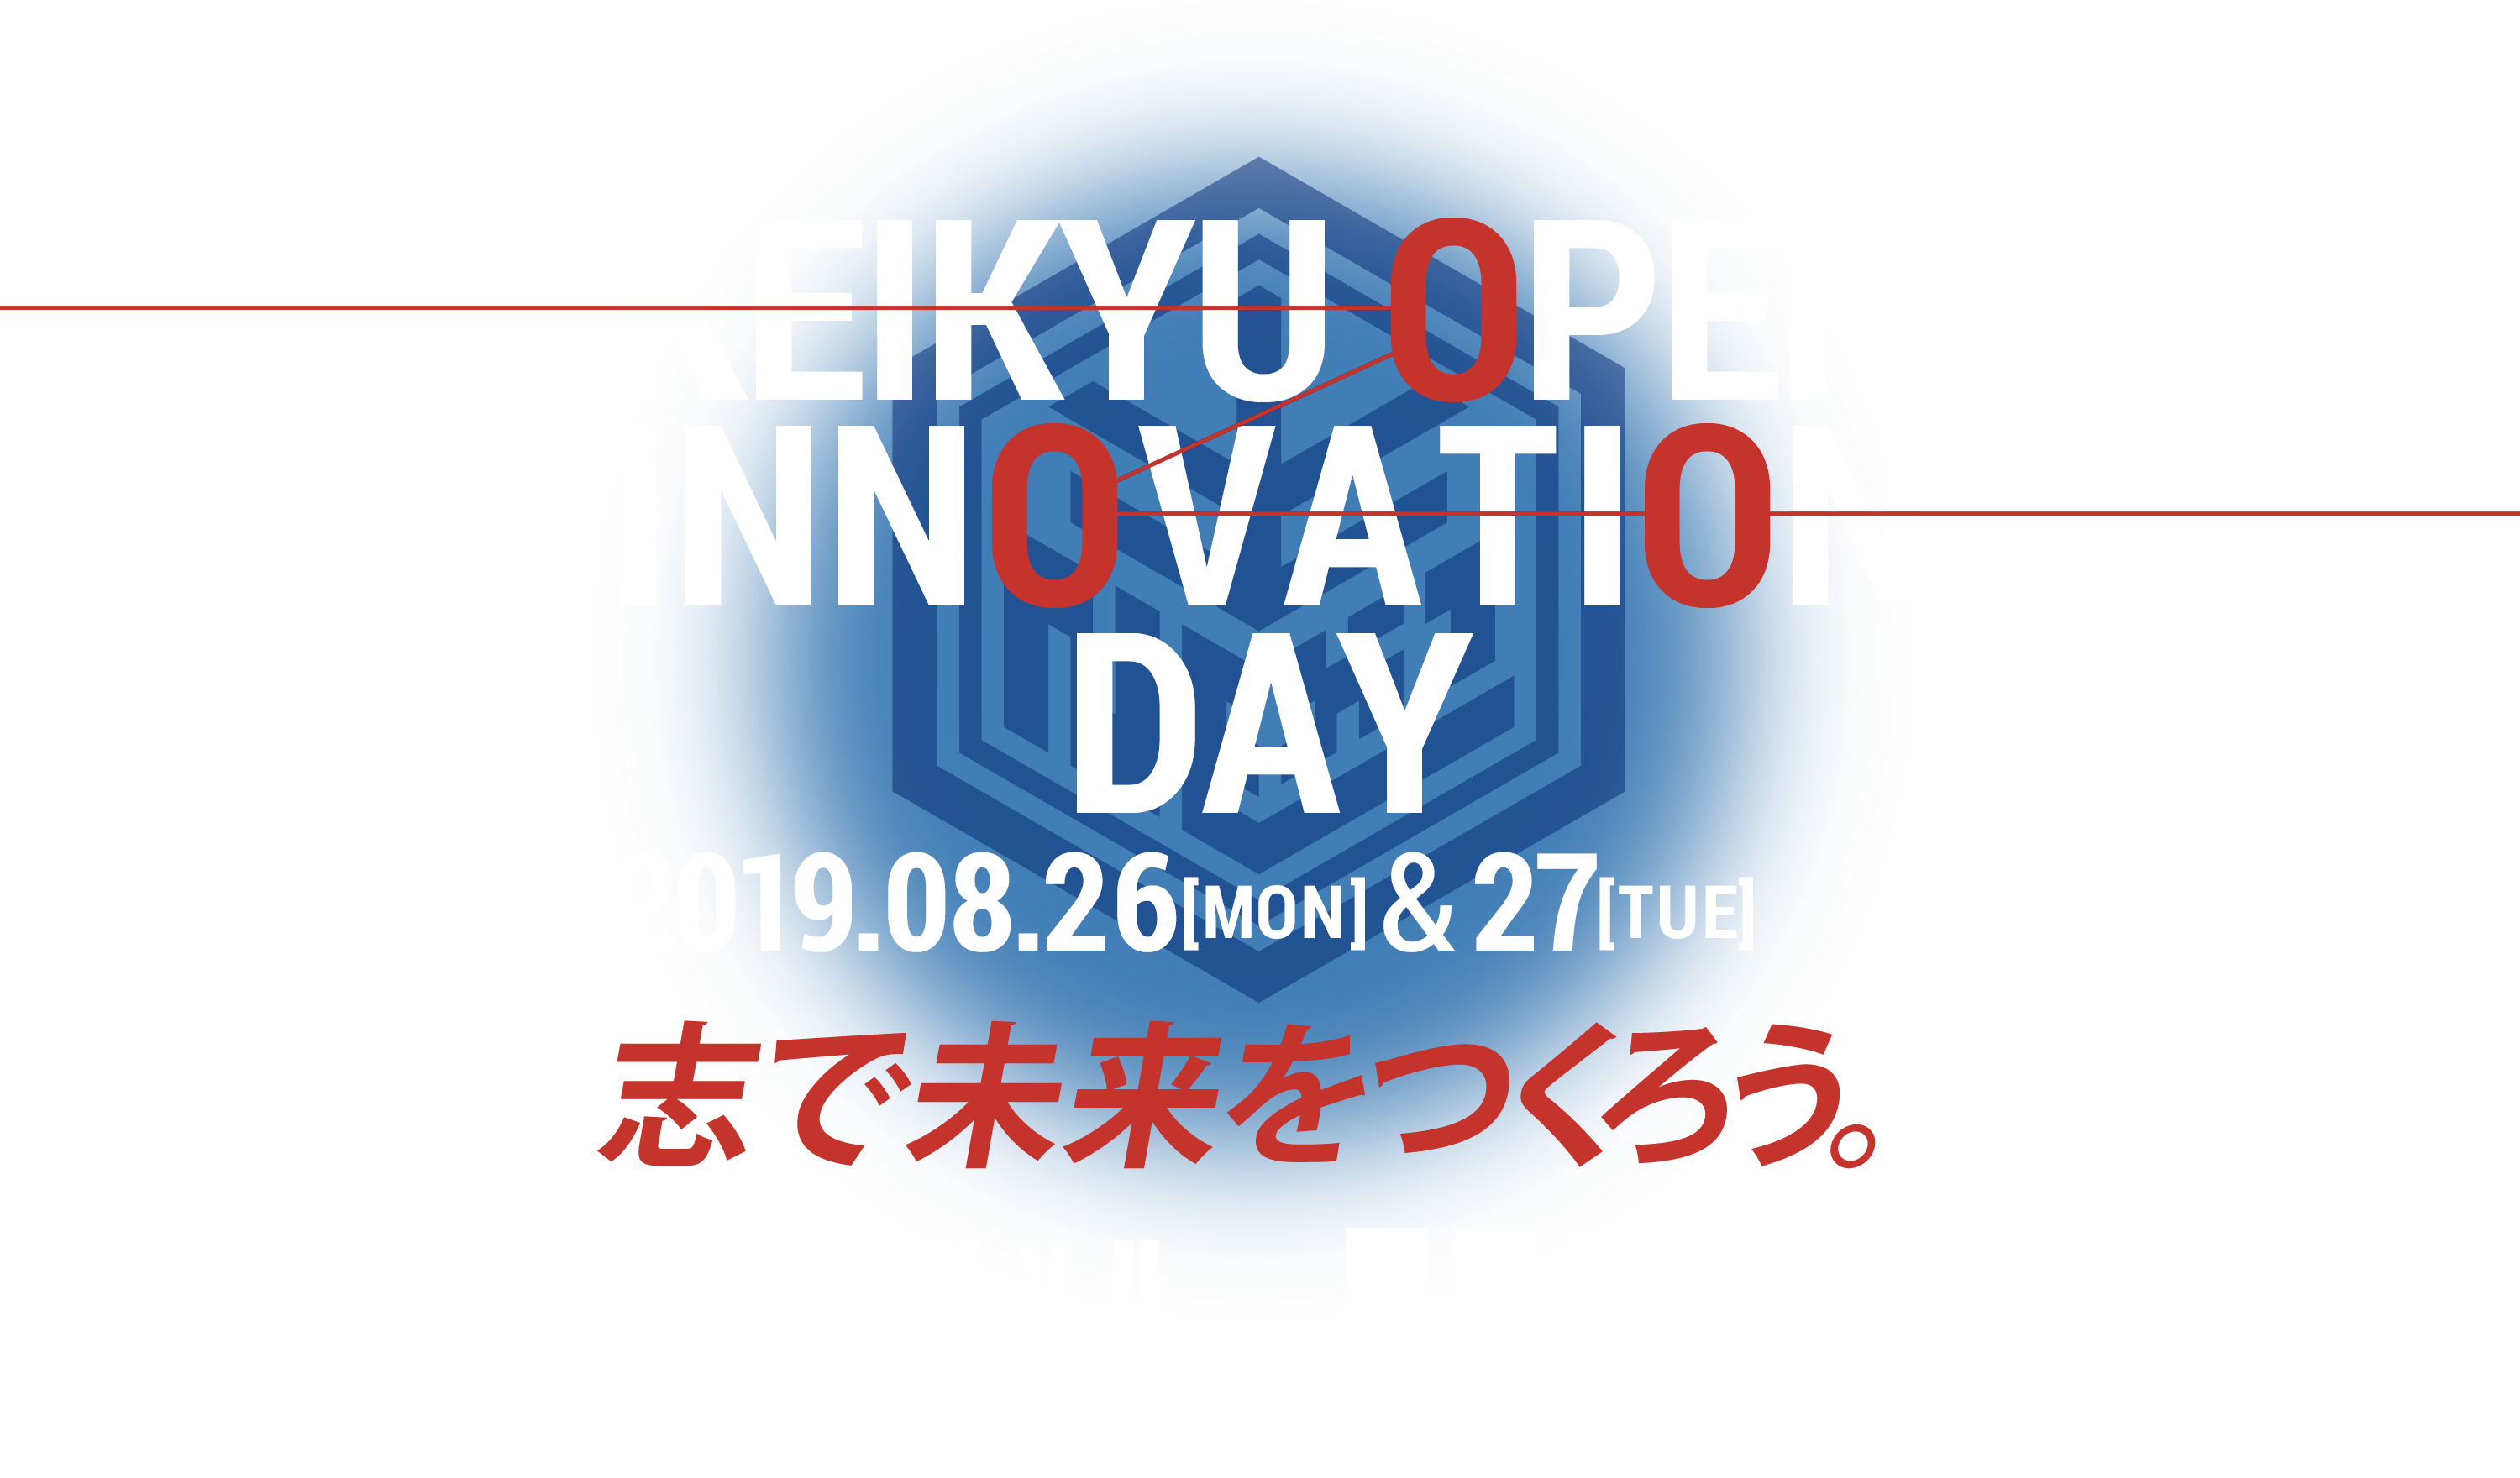 KEIKYU OPEN INNOVATION DAY 2019.08.26[MON] & 27[TUE] 志で未来をつくろう。